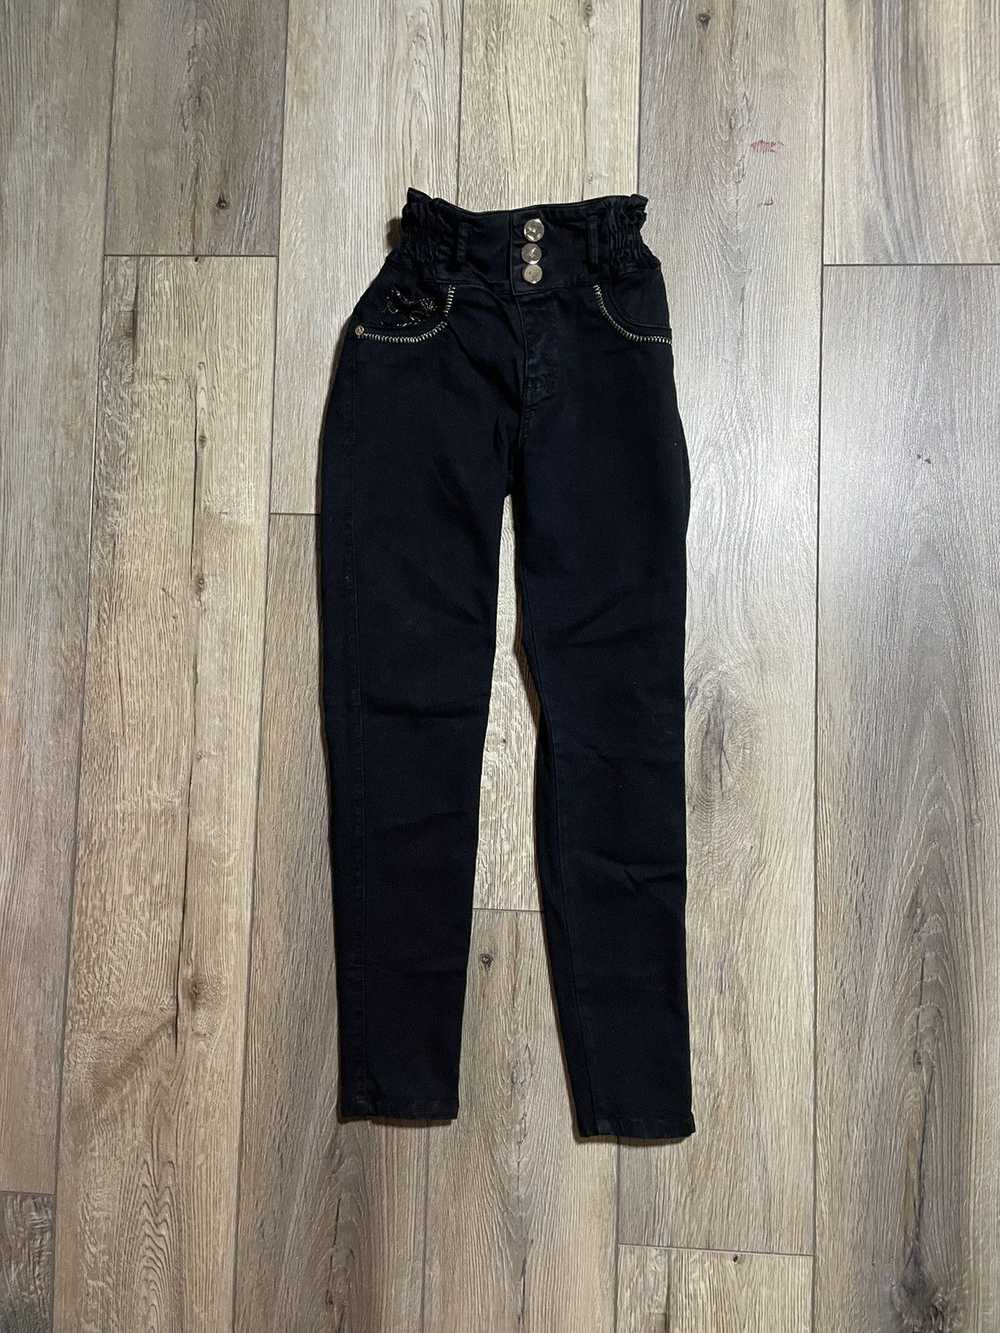 Other Black Jeans - image 1